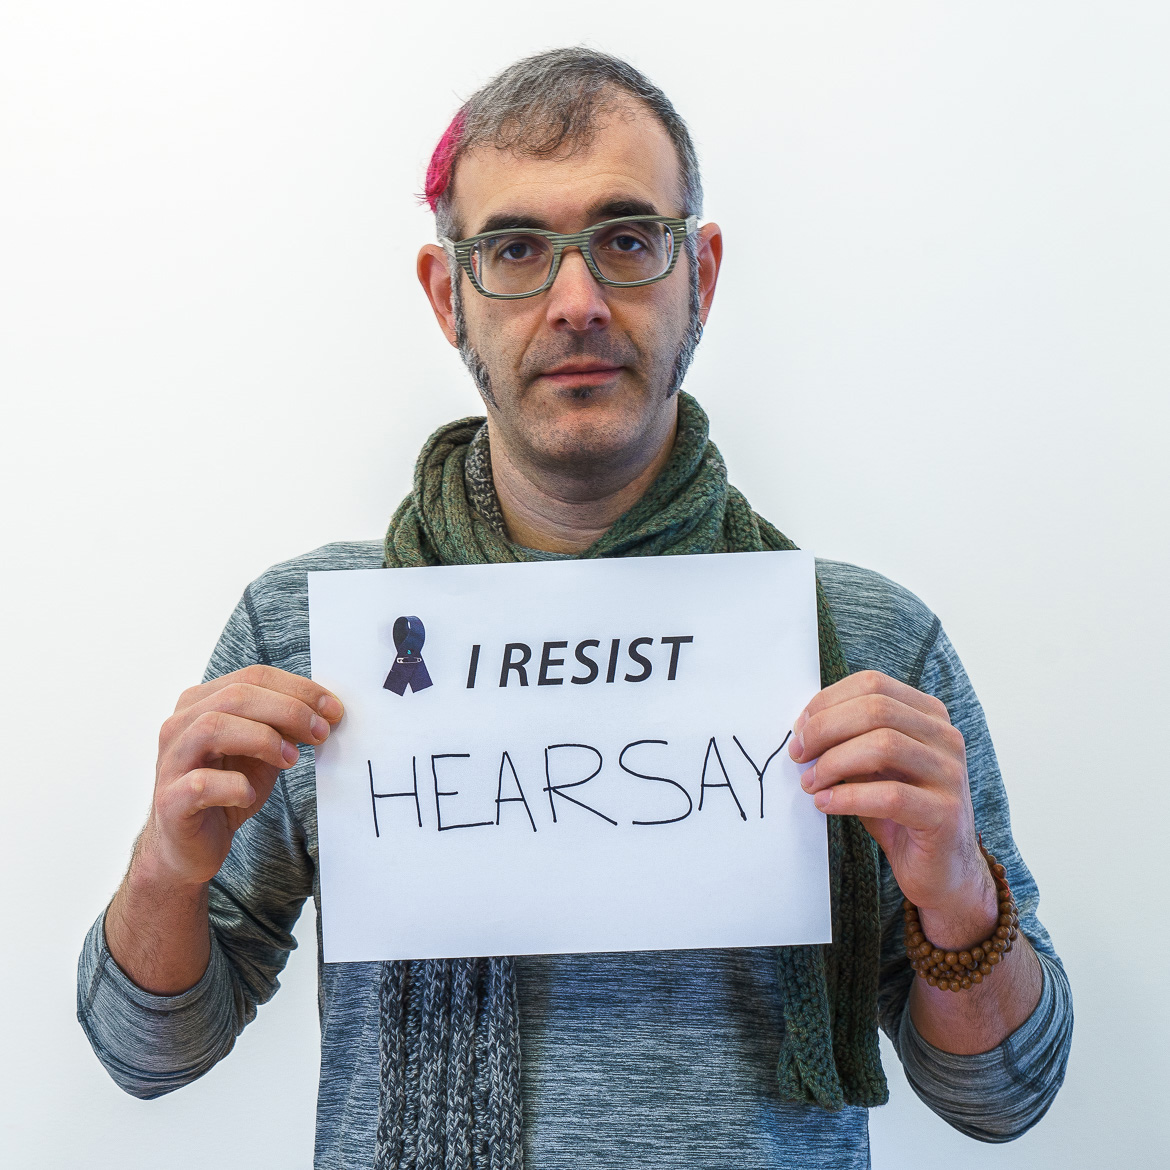 I resist hearsay